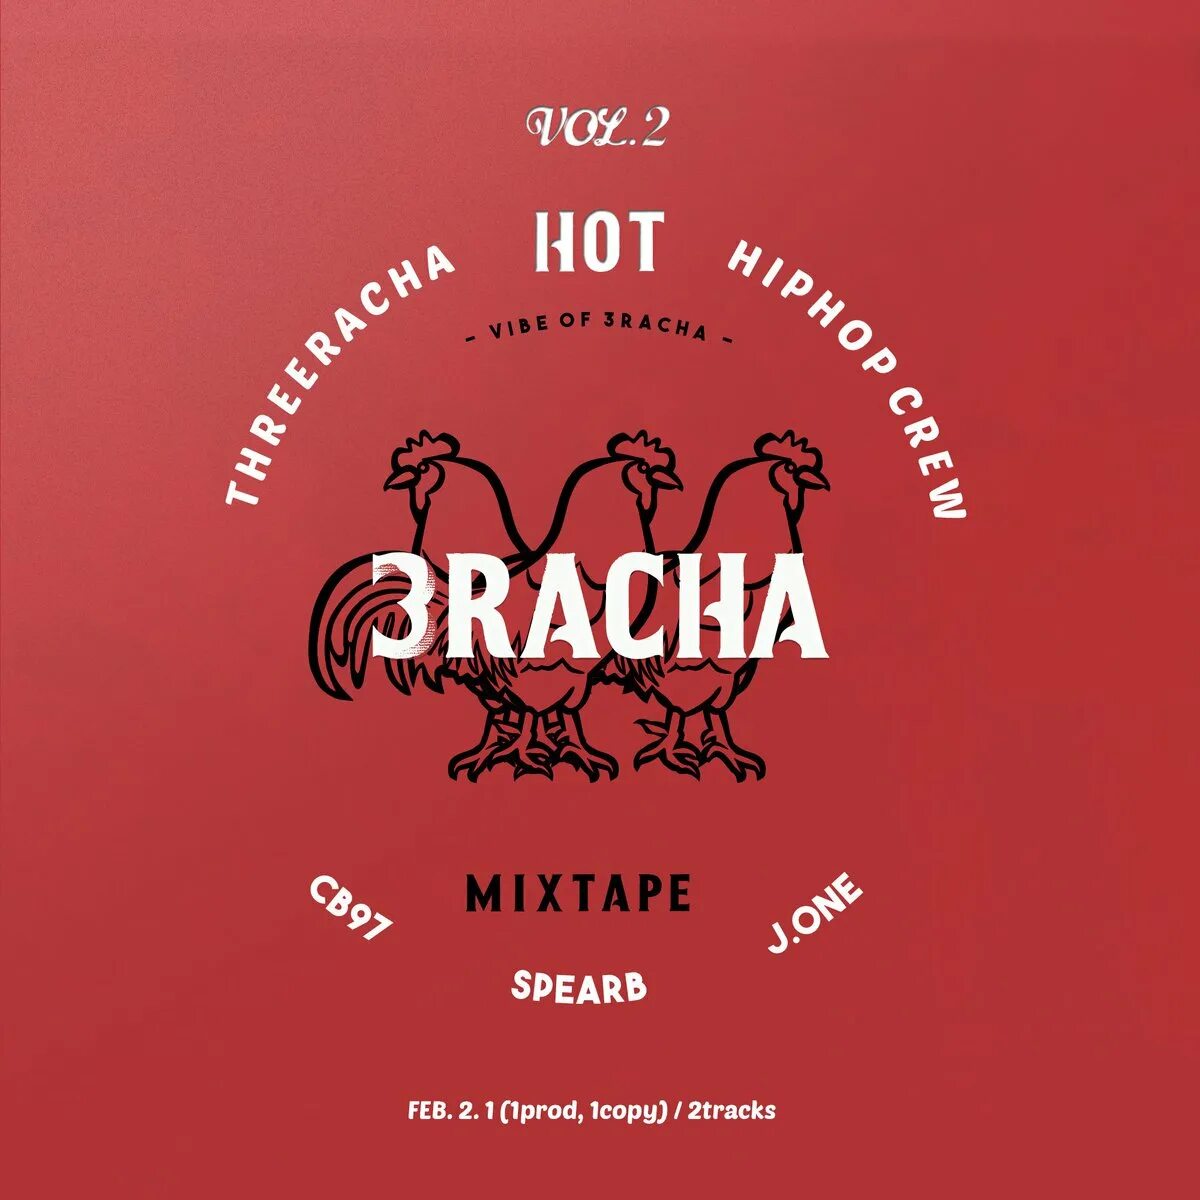 3racha stray kids песни. Cb97 3racha. 3racha обложки альбомов. 42 3racha обложка. 3racha эмблема.